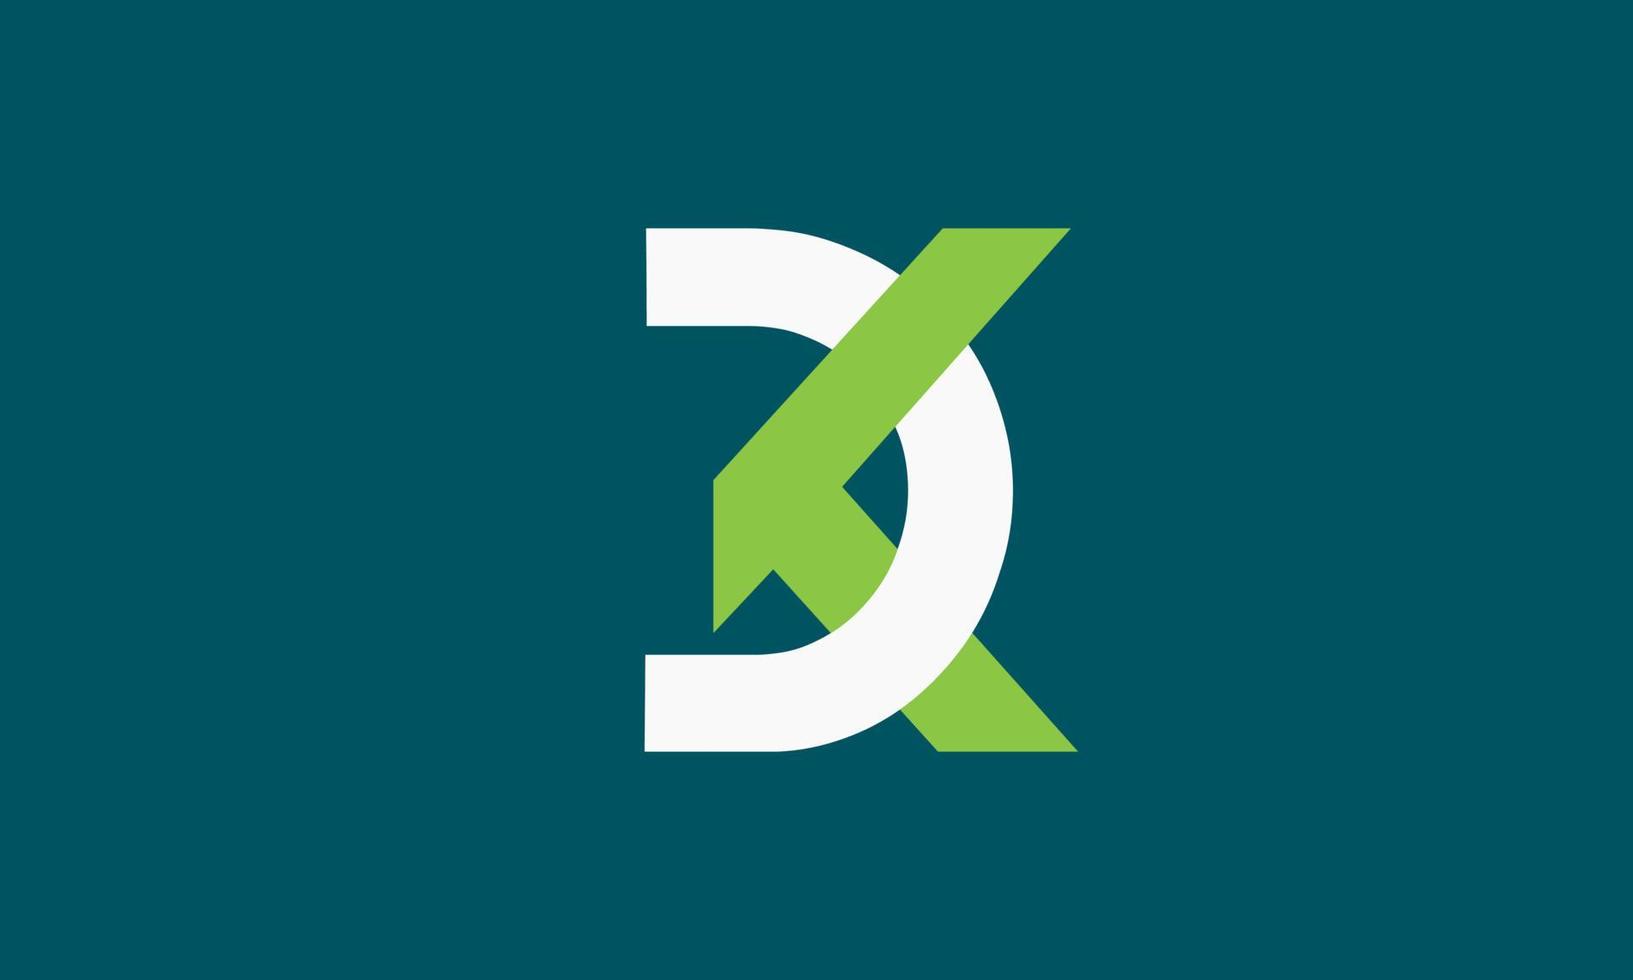 Alphabet letters Initials Monogram logo DK, KD, D and K vector